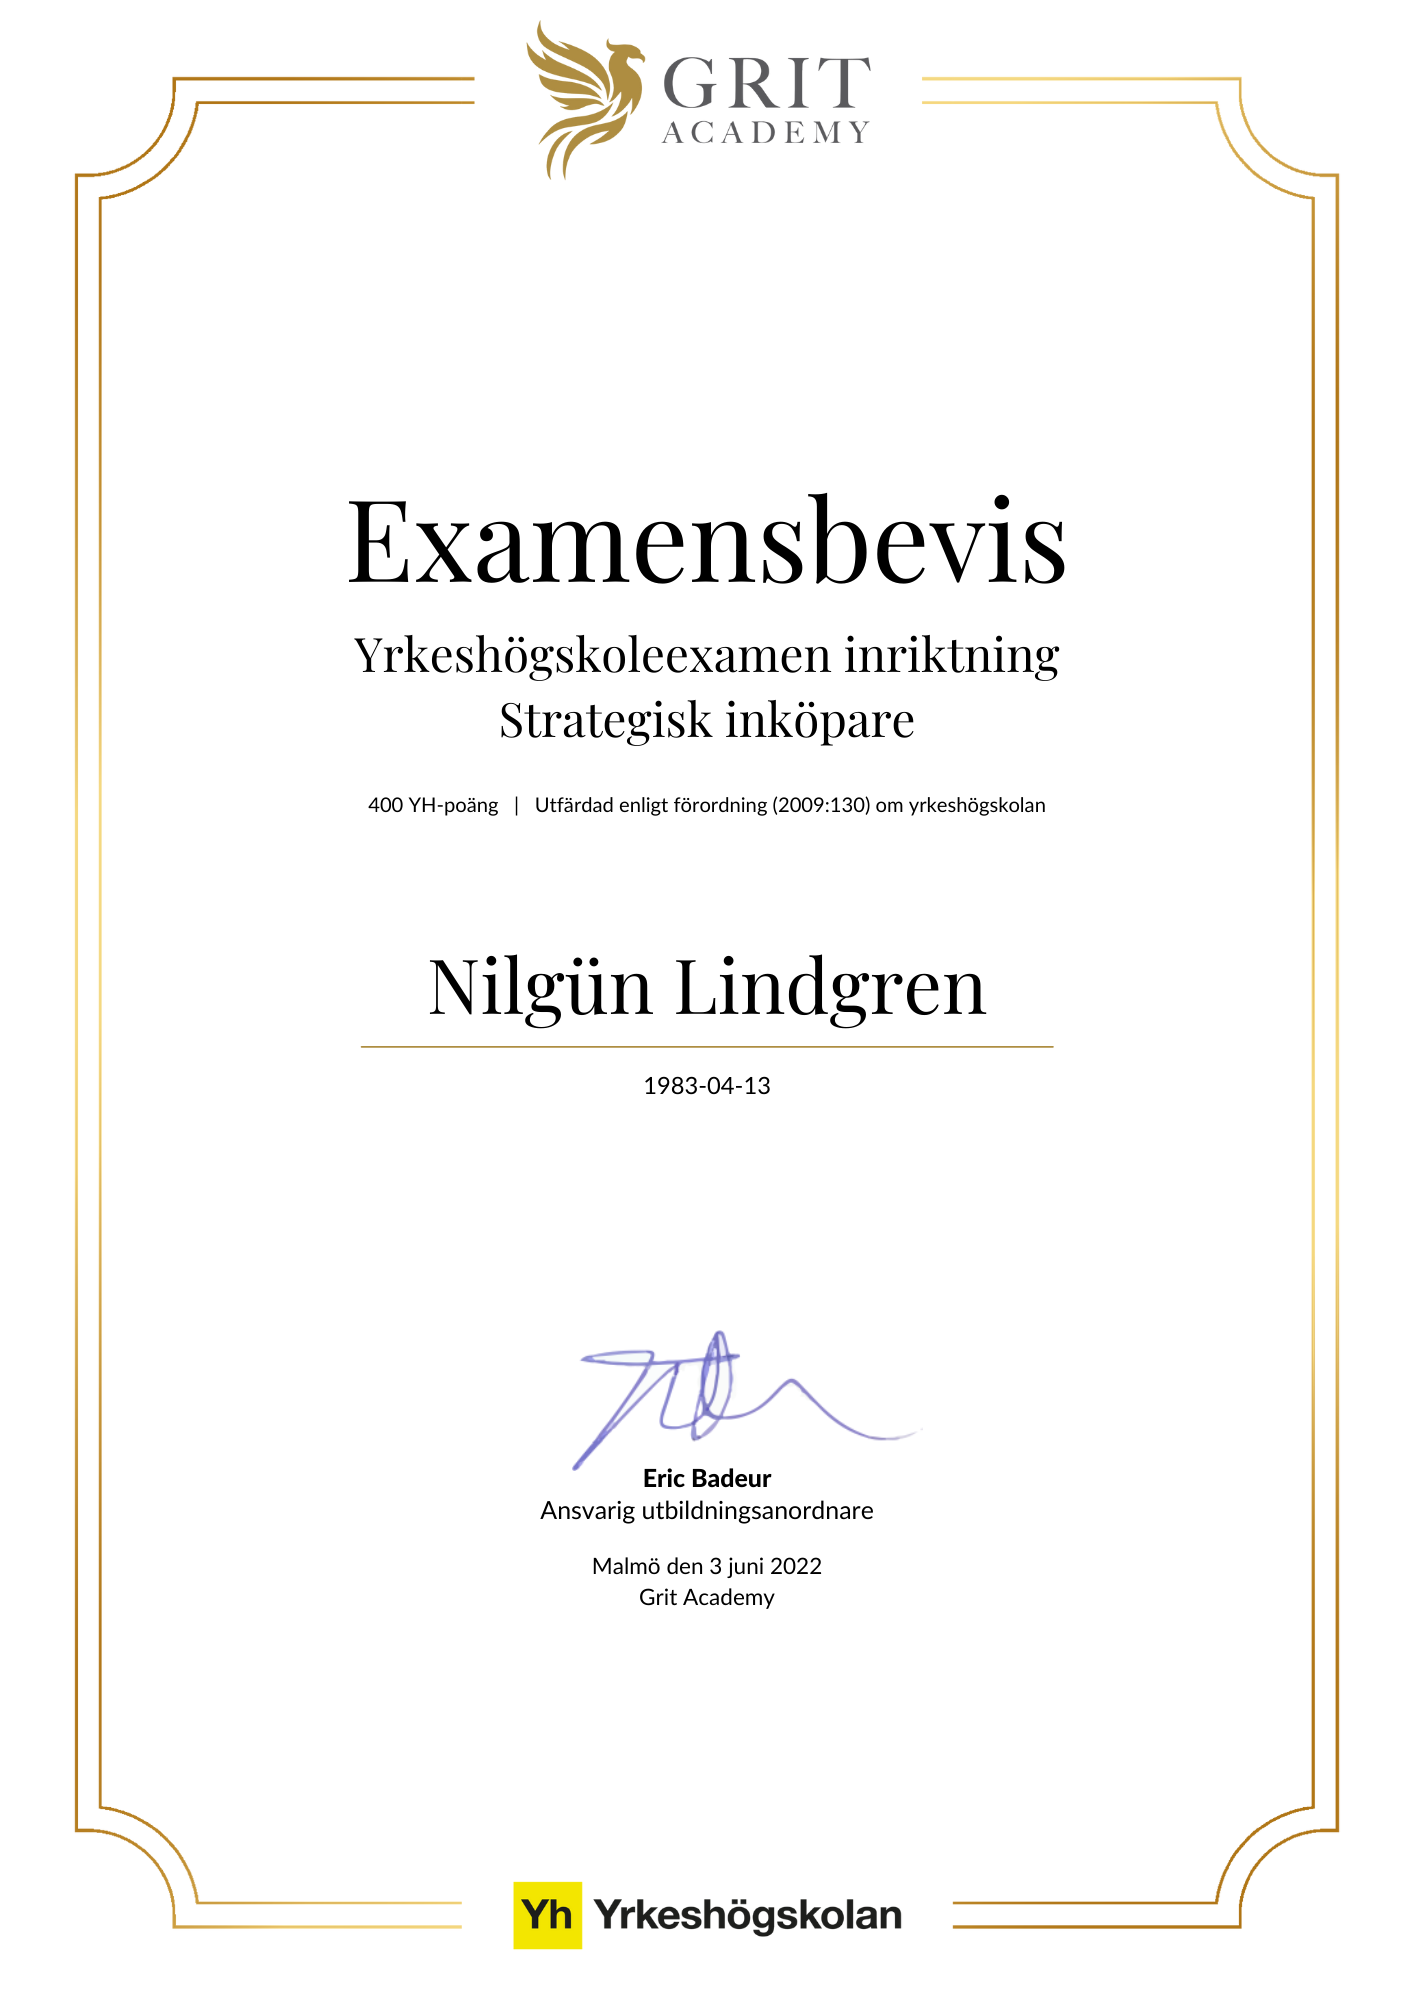 Examensbevis Nilgün Lindgren - 1